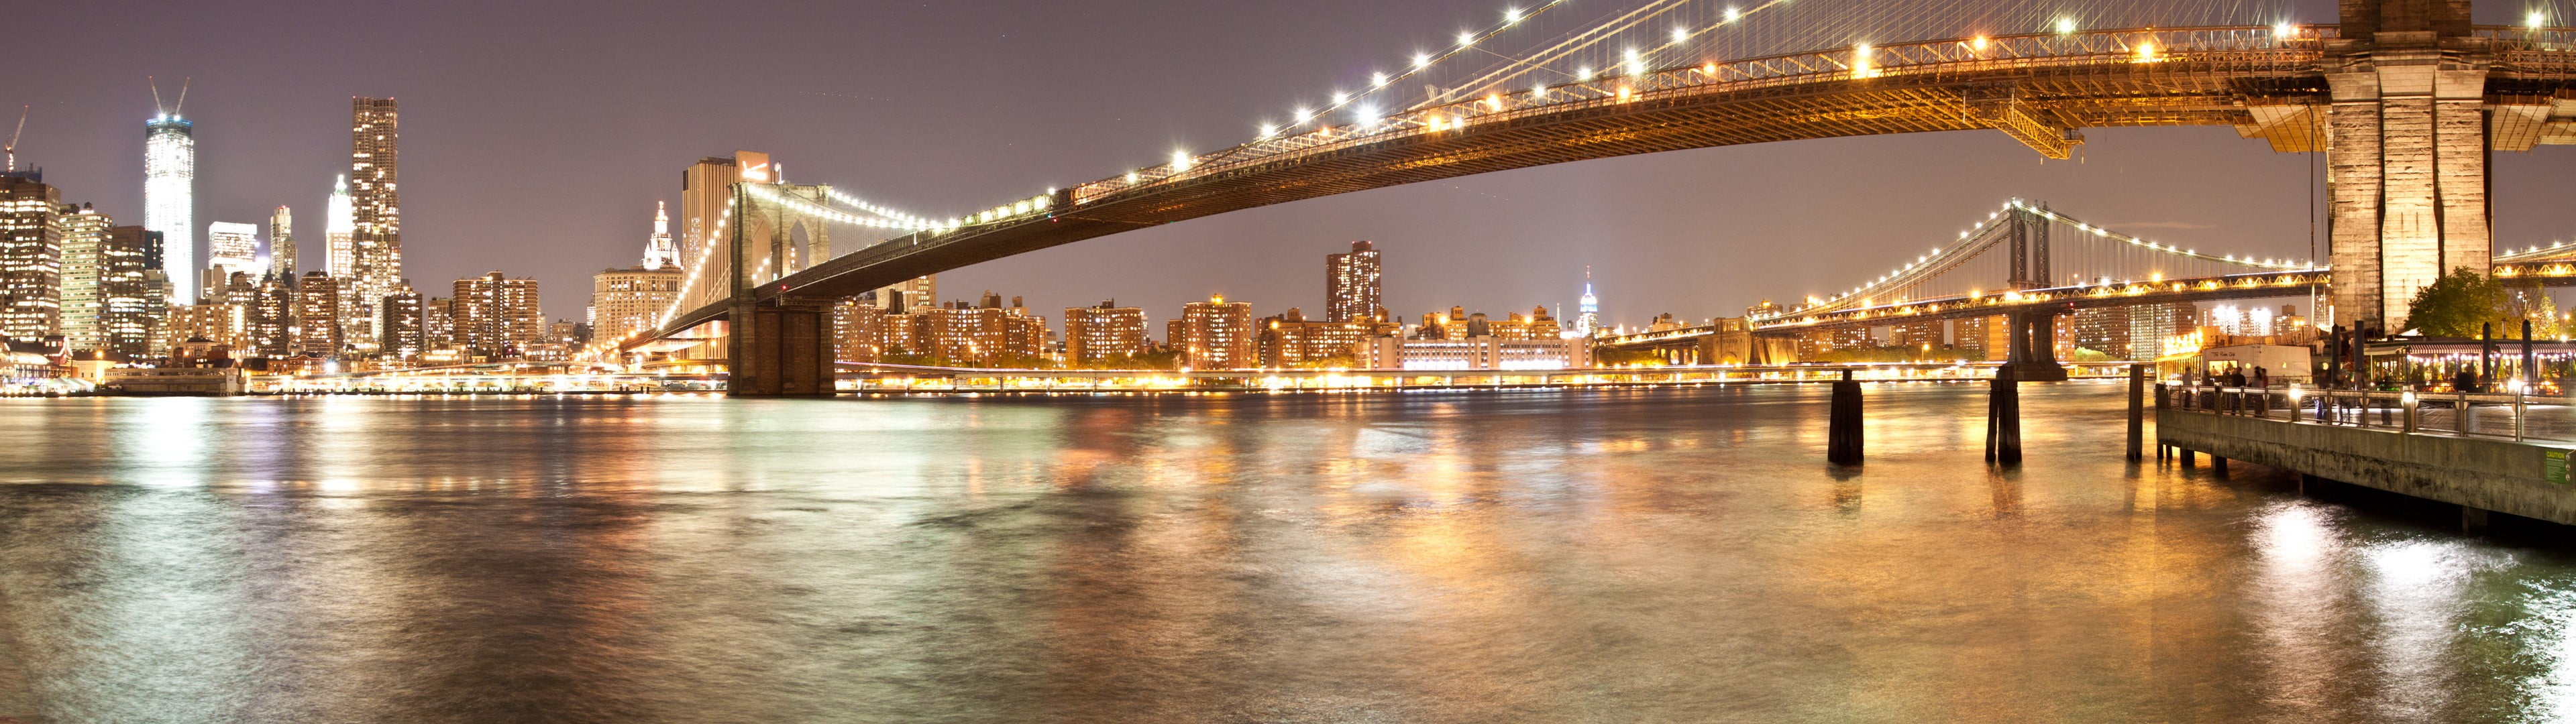 grey bridge, New York City, USA, architecture, night, built structure